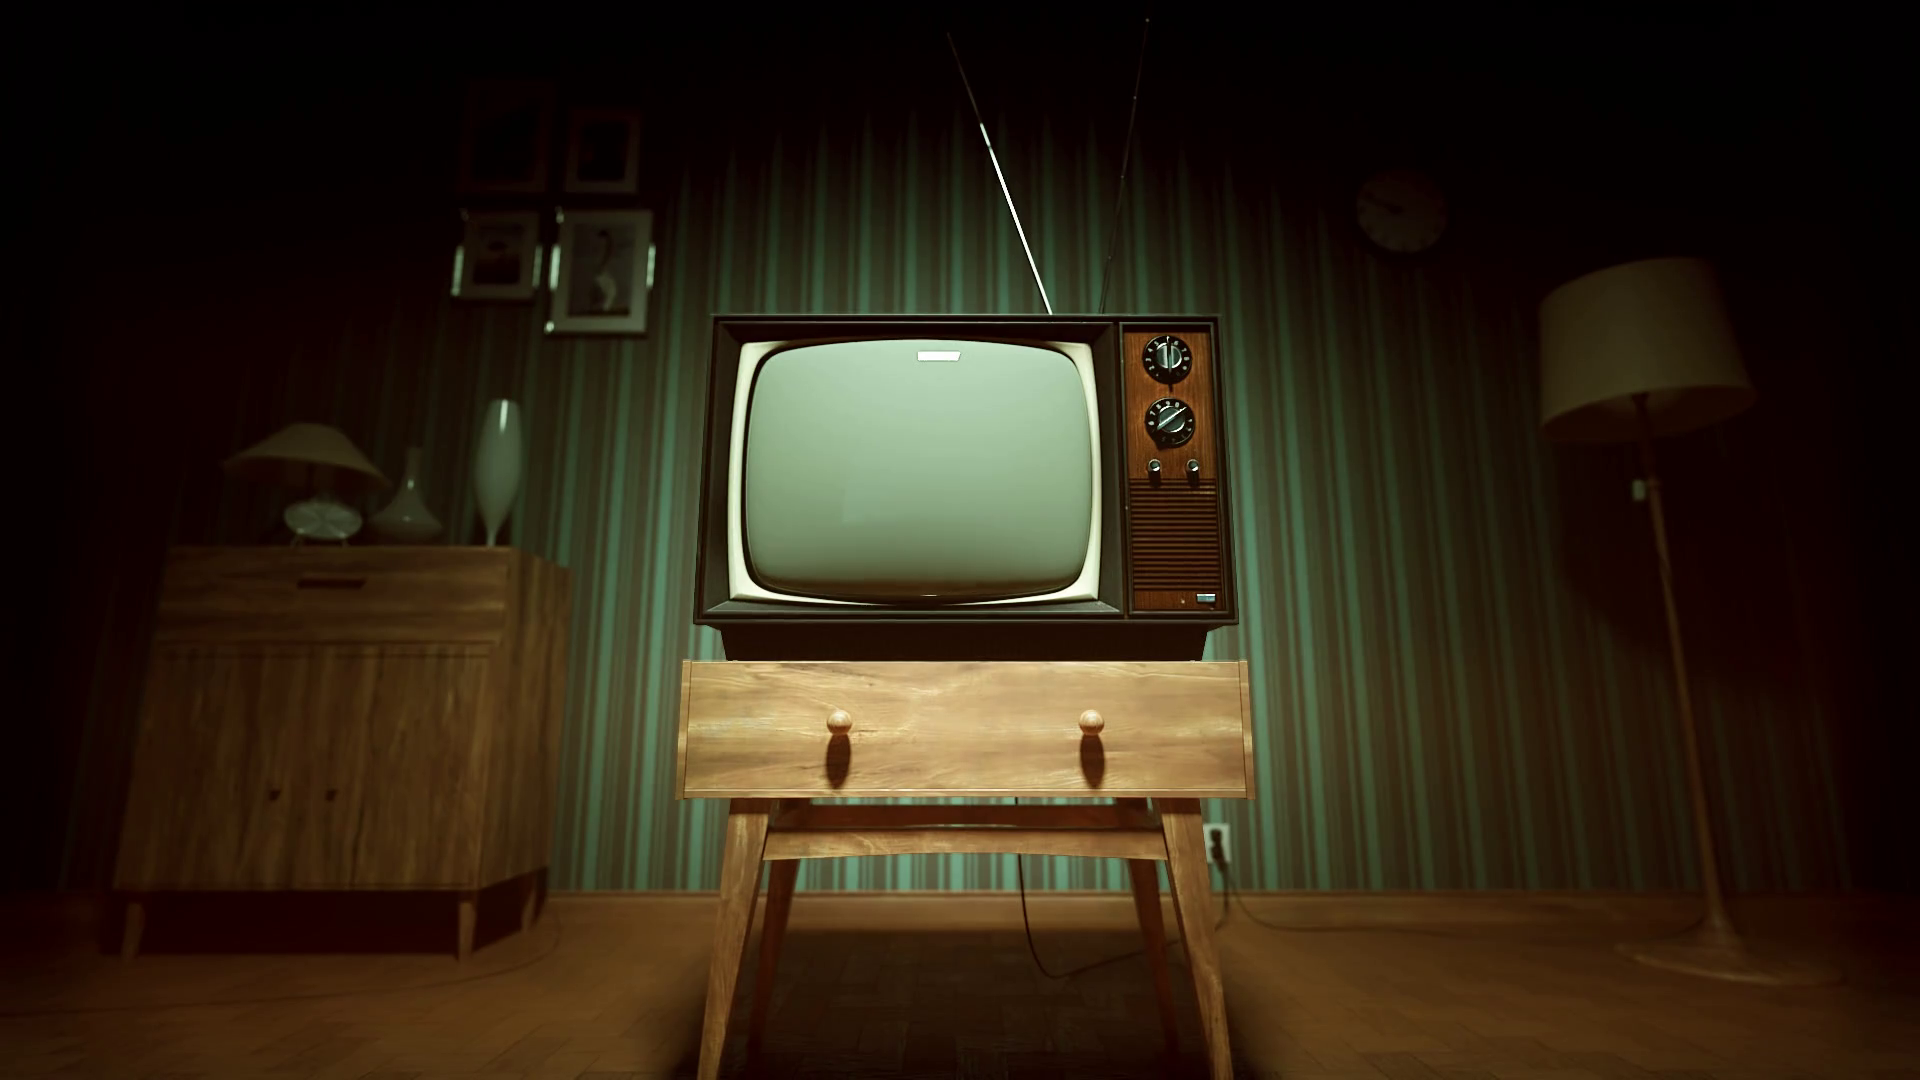 Телевизор 15 минут. Старый телевизор. Старинный телевизор. Старый телевизор в комнате. Ретро телевизор.